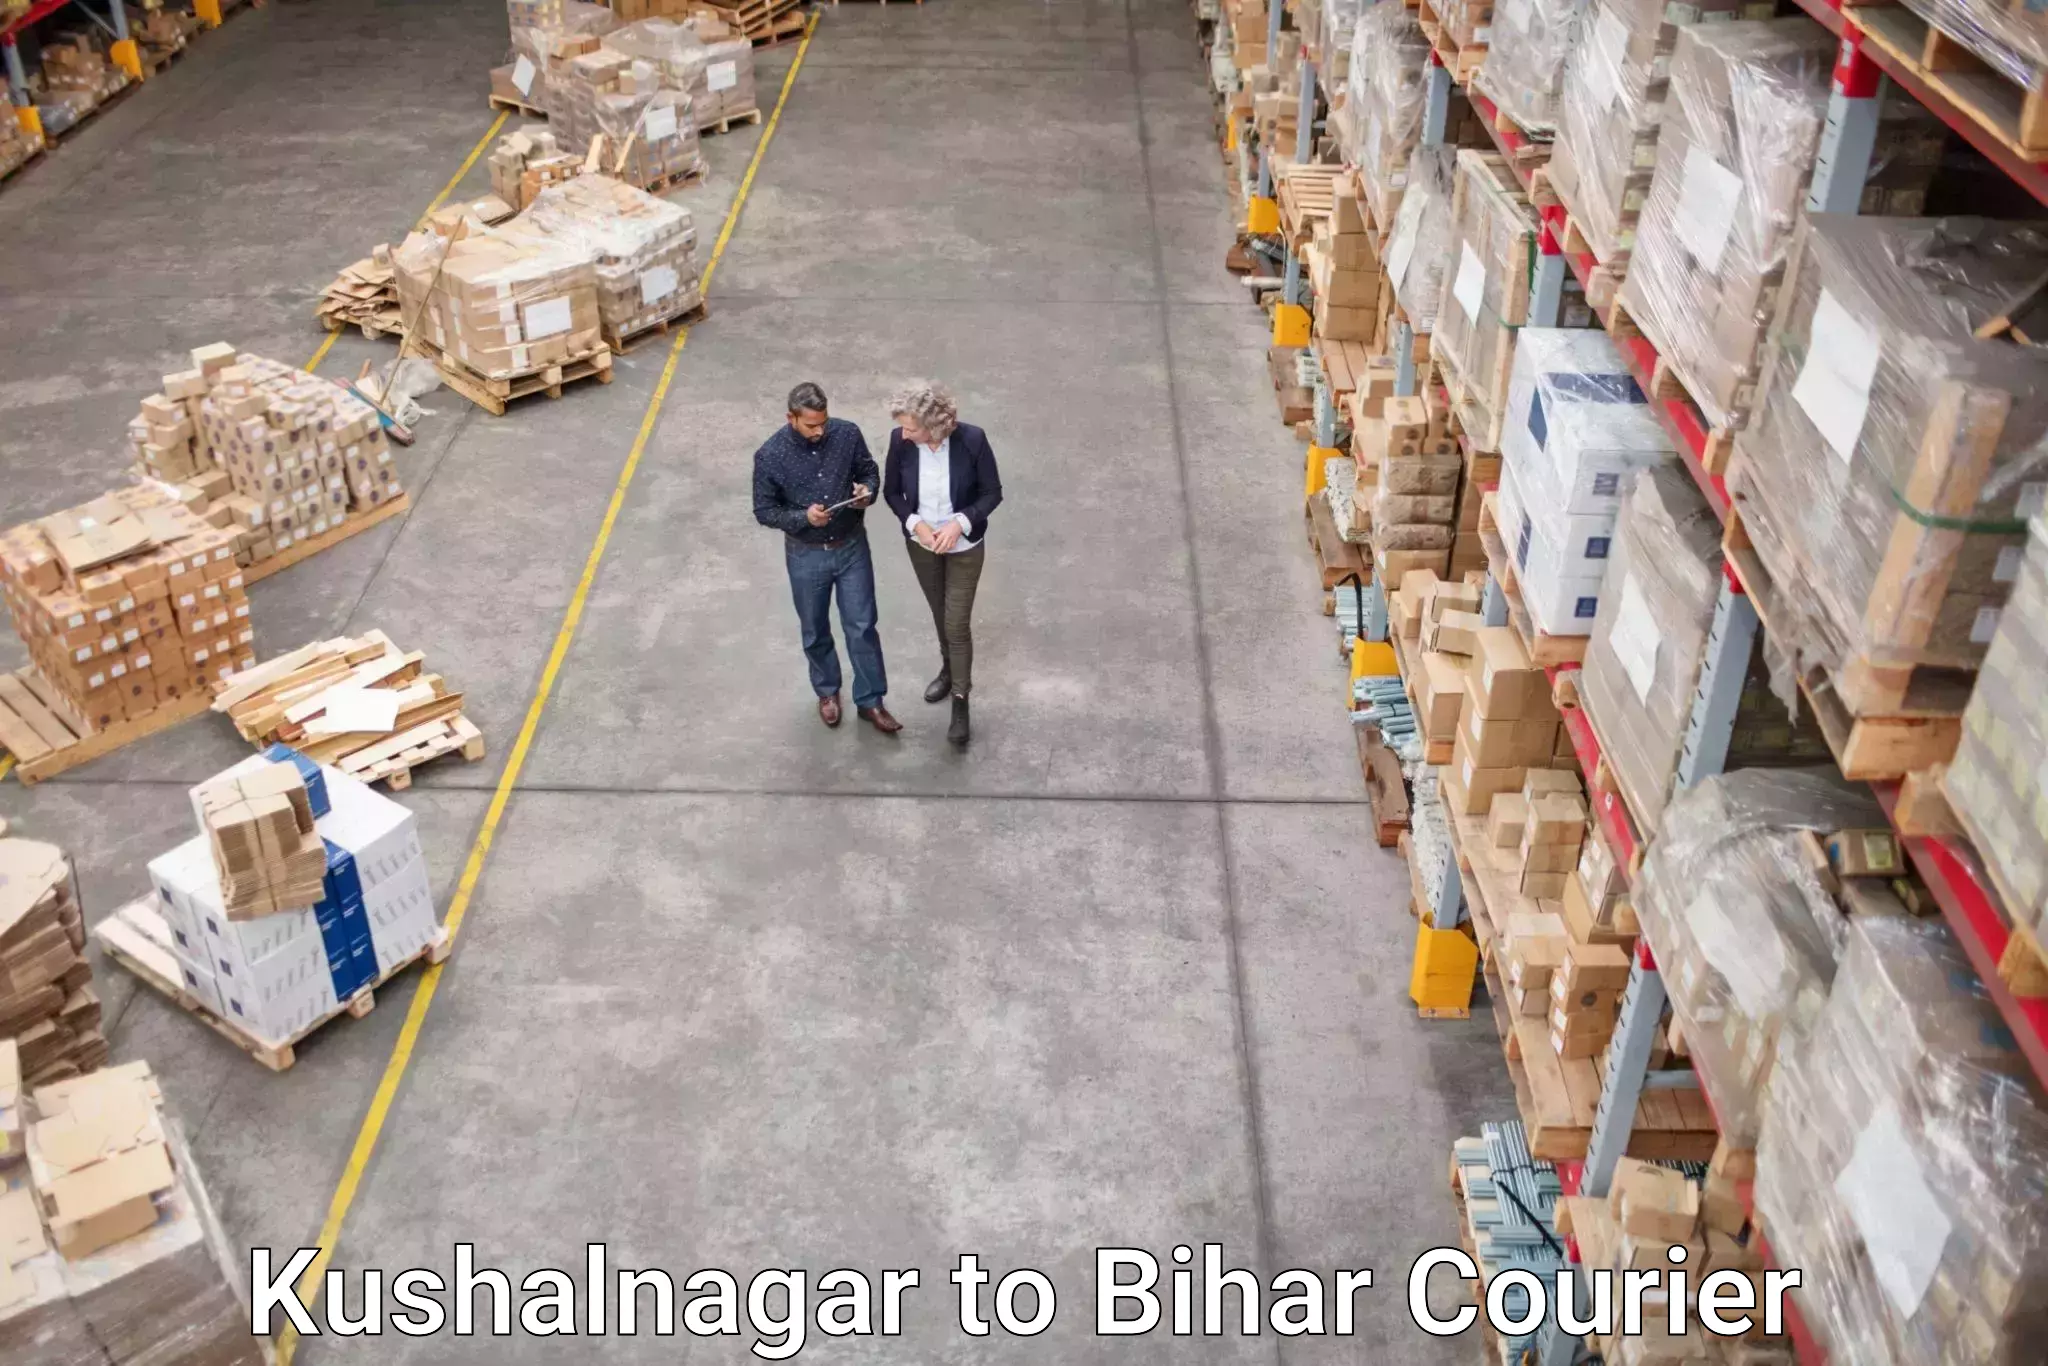 Courier service innovation Kushalnagar to Bikramganj